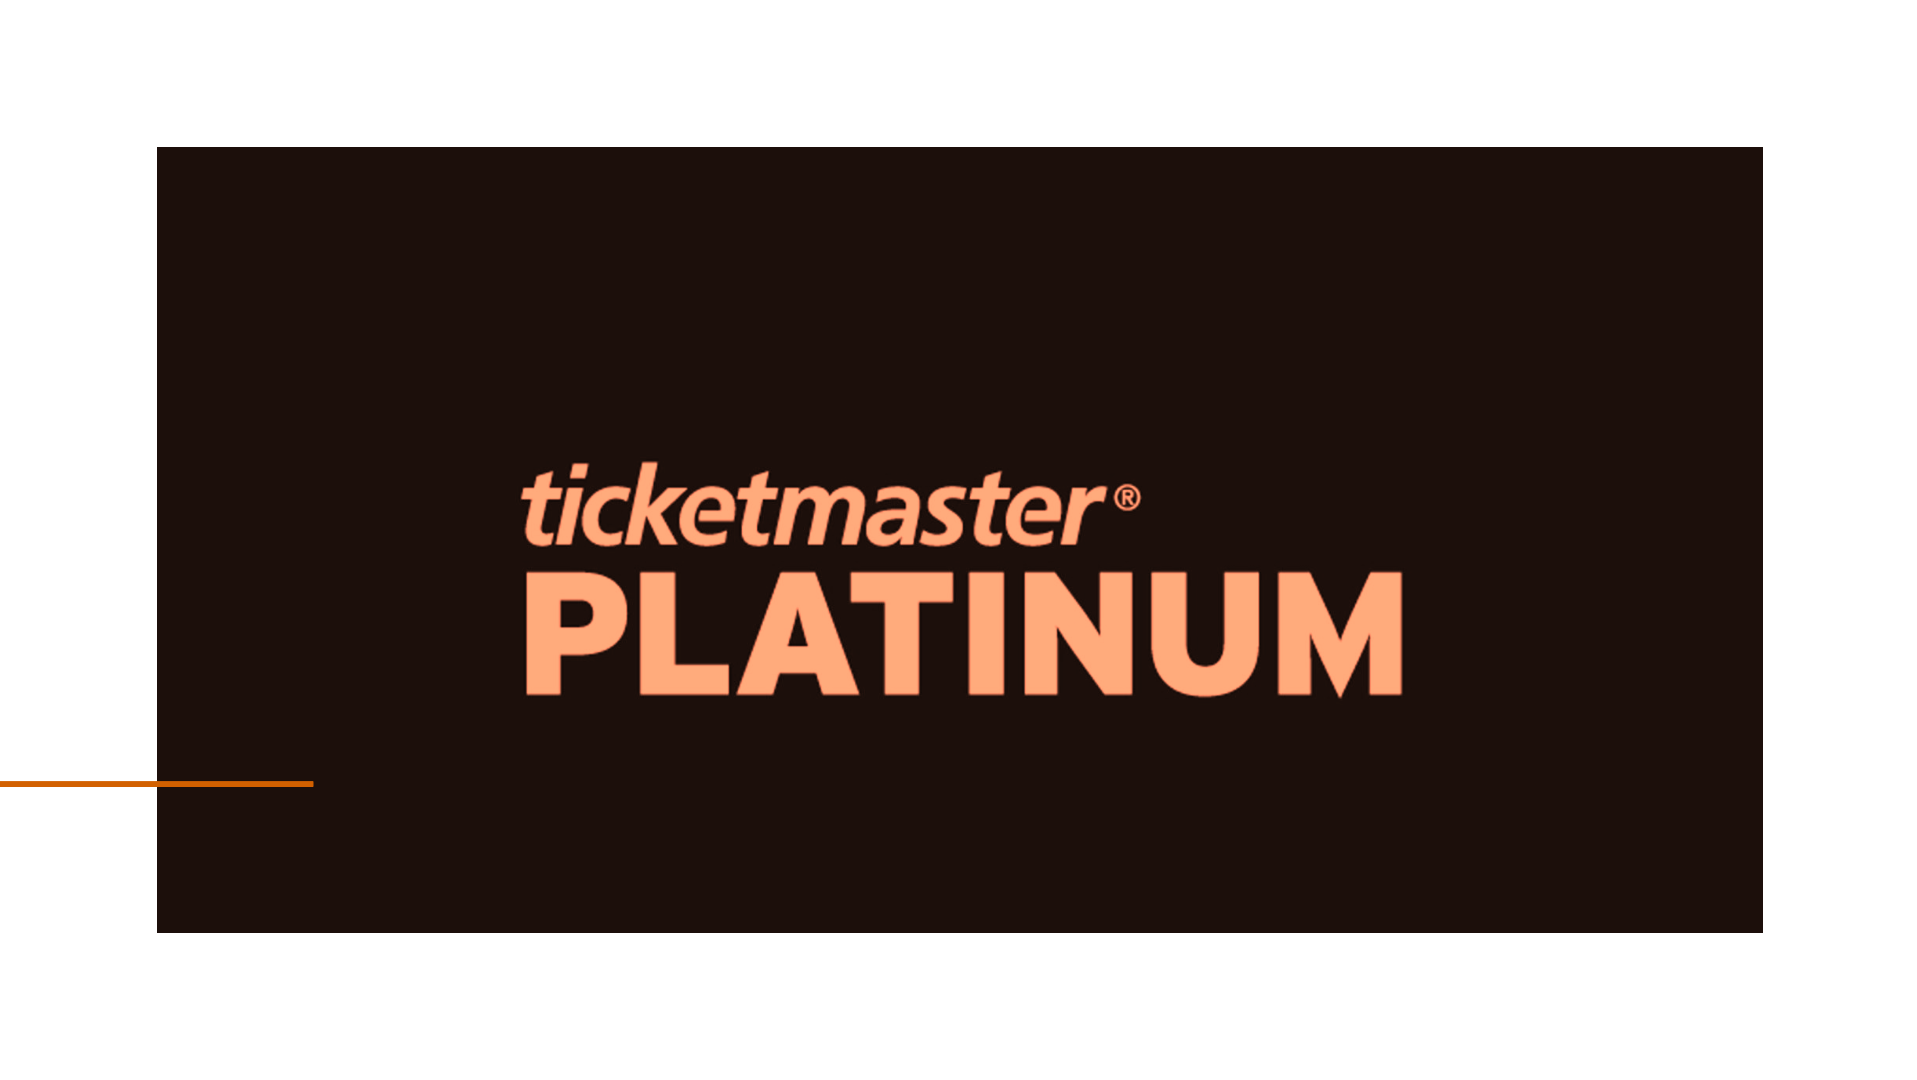 Ticketmaster's Official Platinum